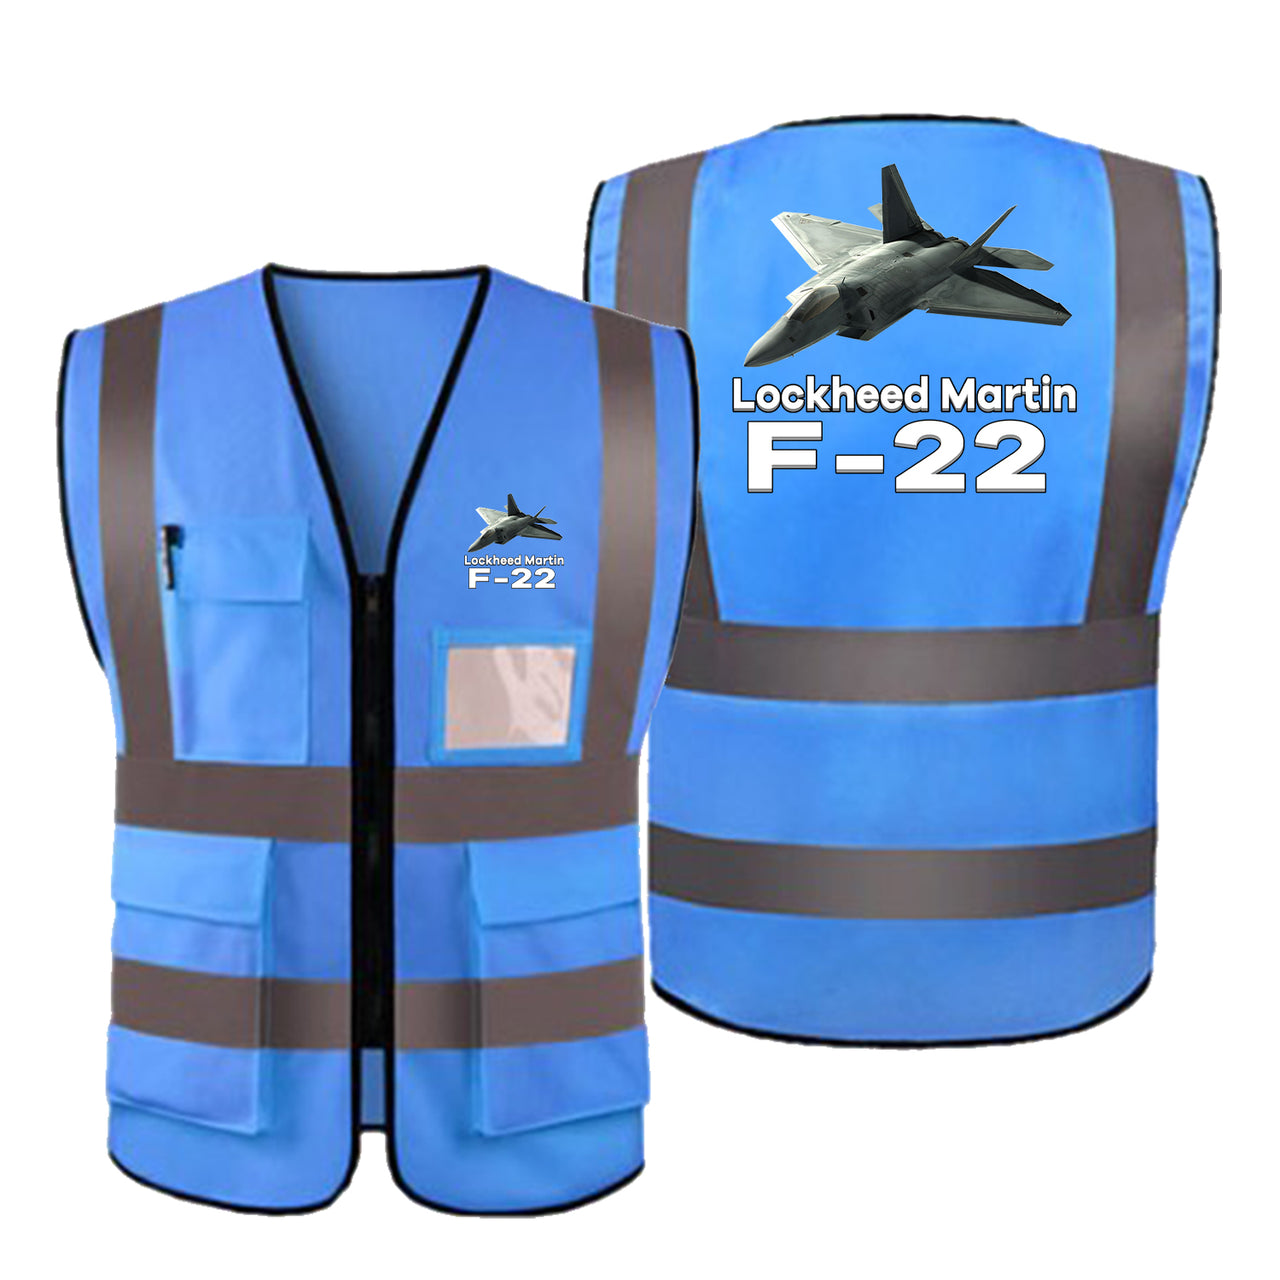 The Lockheed Martin F22 Designed Reflective Vests